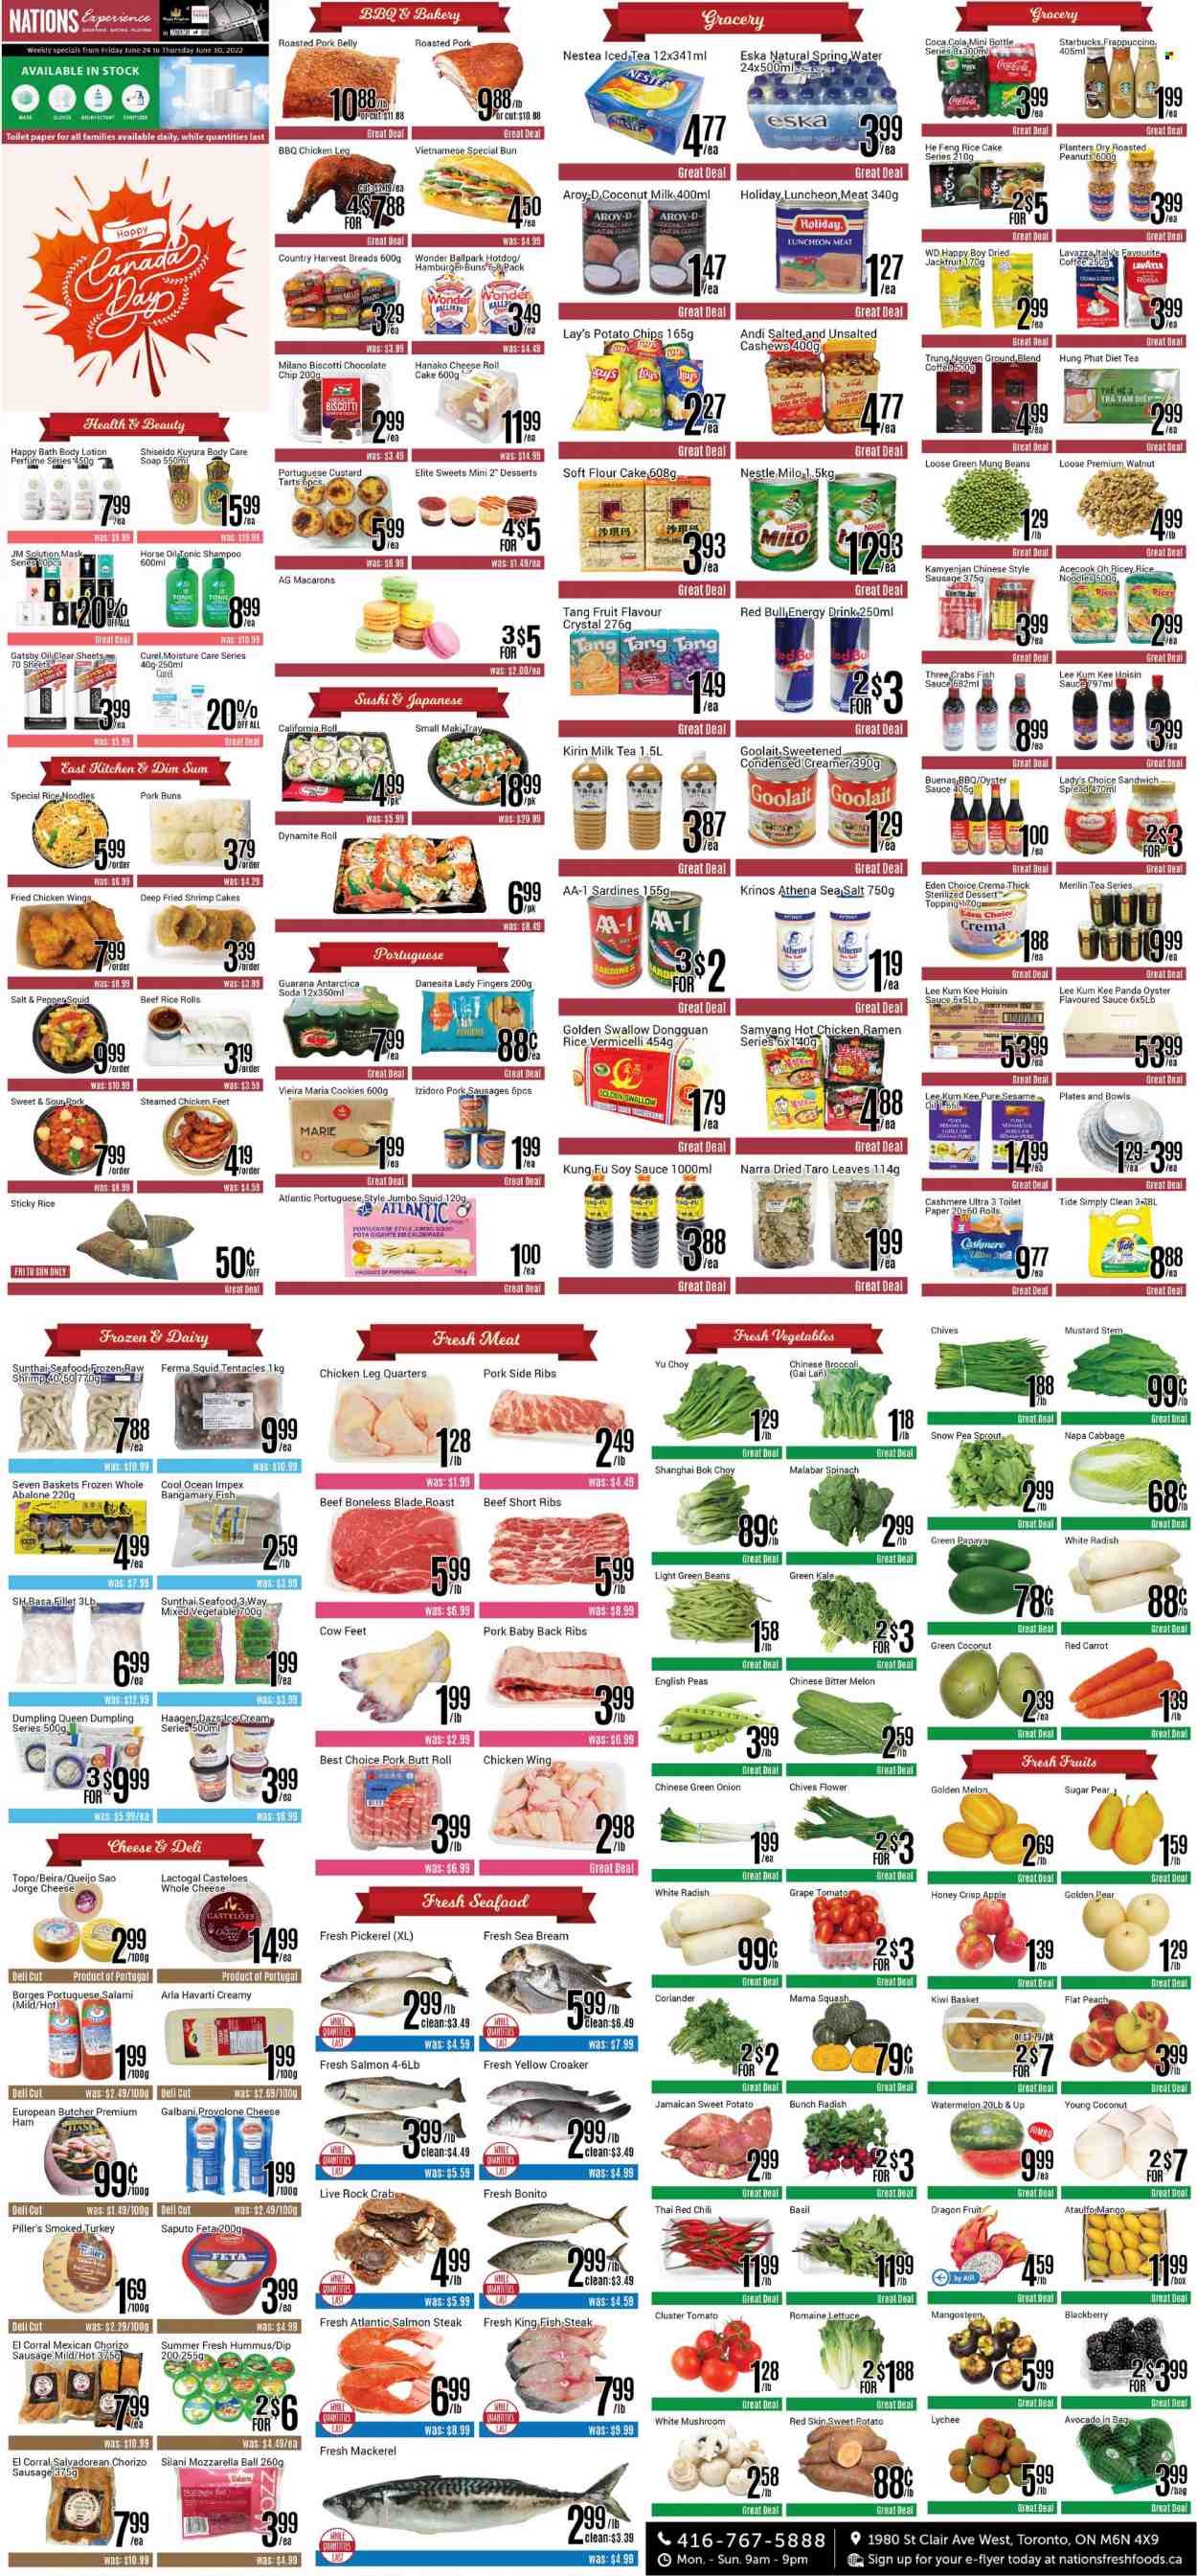 thumbnail - Nations Fresh Foods Flyer - June 24, 2022 - June 30, 2022 - Sales products - mushrooms, hot dog rolls, buns, burger buns, bok choy, broccoli, cabbage, green beans, radishes, sweet potato, kale, peas, onion, lettuce, white radish, green onion, chives, lychee, watermelon, papaya, pears, melons, dragon fruit, mackerel, salmon, sardines, squid, oysters, seafood, crab, fish, king fish, seabream, shrimps, abalone, fish steak, walleye, ramen, hot dog, sandwich, fried chicken, dumplings, noodles, salami, ham, sausage, hummus, lunch meat, Havarti, feta, Galbani, Provolone, Arla, custard, Milo, creamer, dip, ice cream, Häagen-Dazs, mixed vegetables, Country Harvest, biscotti, cookies, lady fingers, potato chips, Lay’s, cheese rolls, flour, sugar, topping, coconut milk, Borges, rice vermicelli, coriander, fish sauce, mustard, soy sauce, hoisin sauce, oyster sauce, Lee Kum Kee, Classico, sesame oil, oil, honey, cashews, roasted peanuts, peanuts, Planters, Coca-Cola, energy drink, ice tea, tonic, Red Bull, spring water, soda, coffee, Starbucks, frappuccino, Lavazza, chicken legs, chicken paws, chicken, beef ribs, pork belly, pork meat, pork ribs, pork back ribs, Tide, soap, Curél, Shiseido, body lotion, kiwi, mozzarella, Nestlé, shampoo, chorizo, chinese broccoli, steak, desinfection. Page 1.